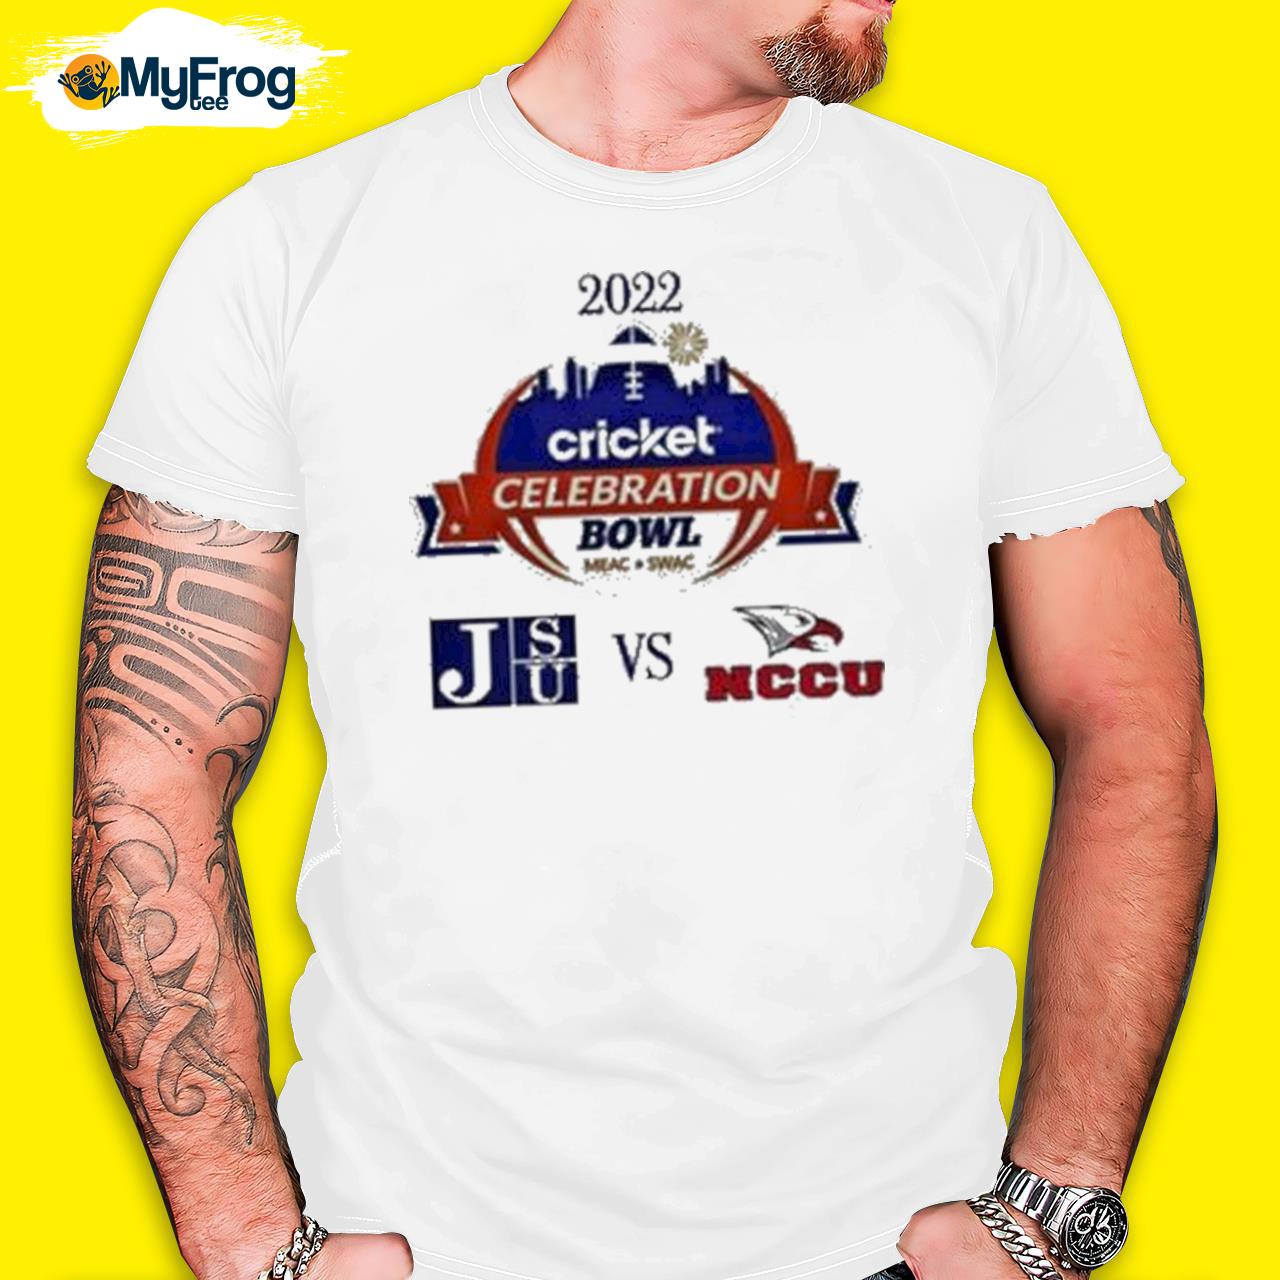 Nccu vs jsu 2022 cricket celebration bowl shirt